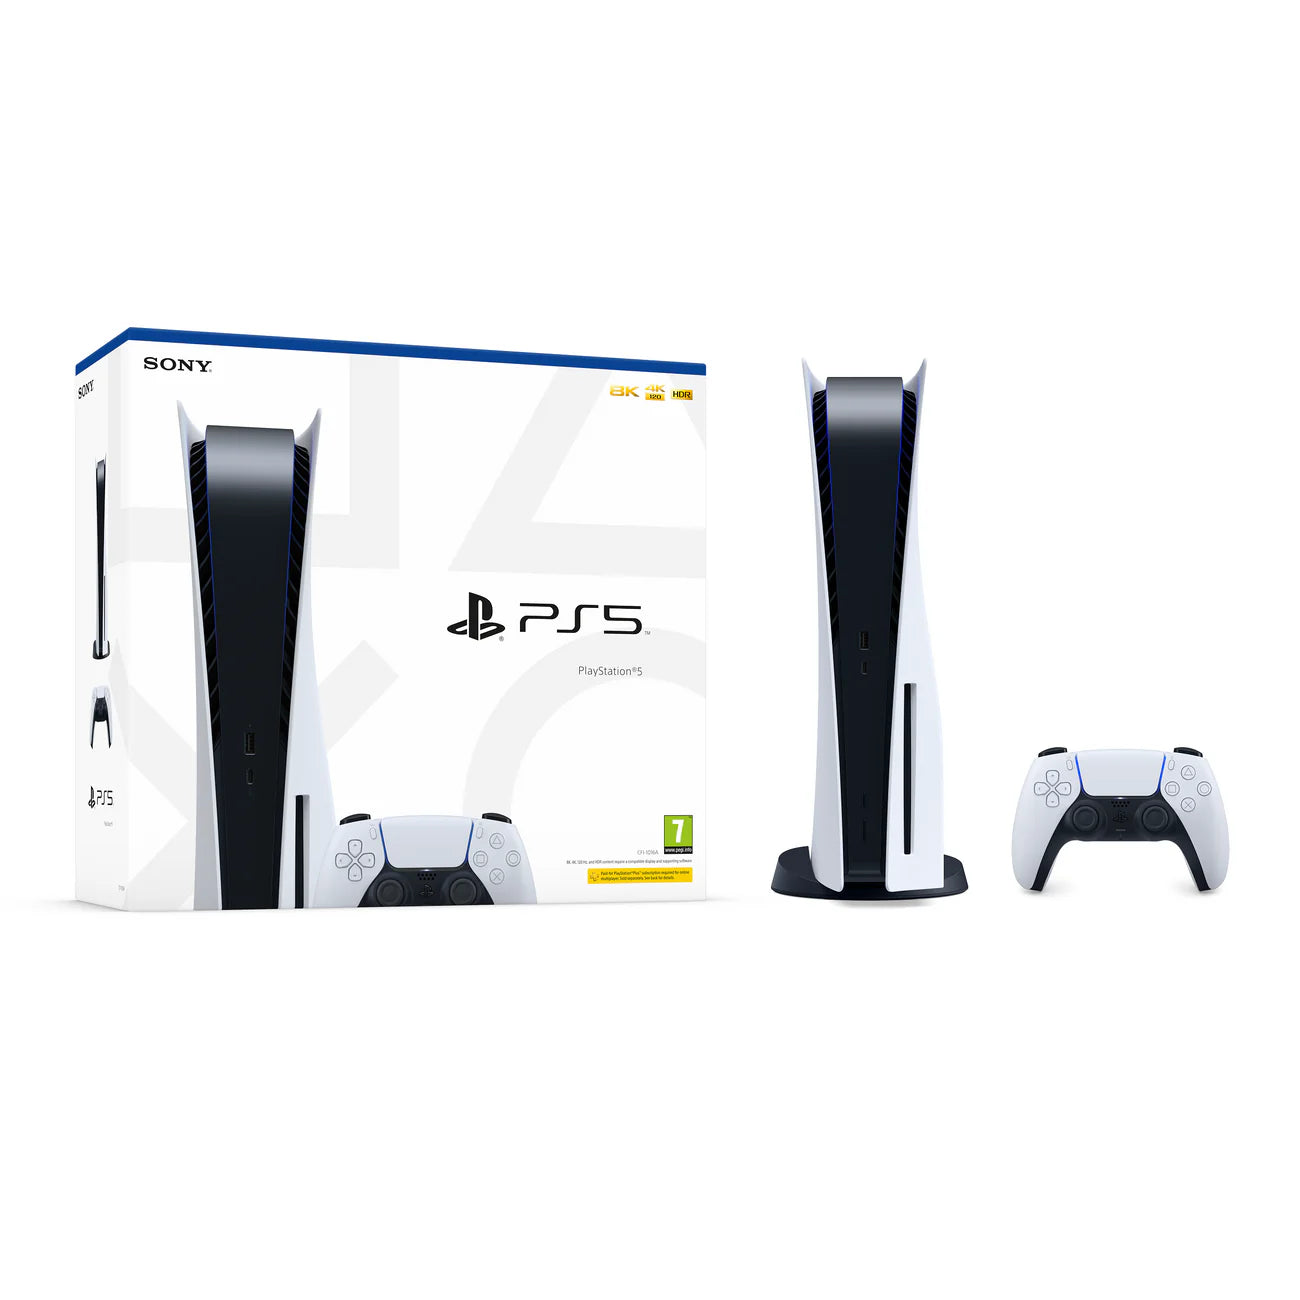 Playstation 1TB Blu-Ray Slim Edition PS5 - קונסולה פלייסטיישן 5 מהדורת בלו-ריי